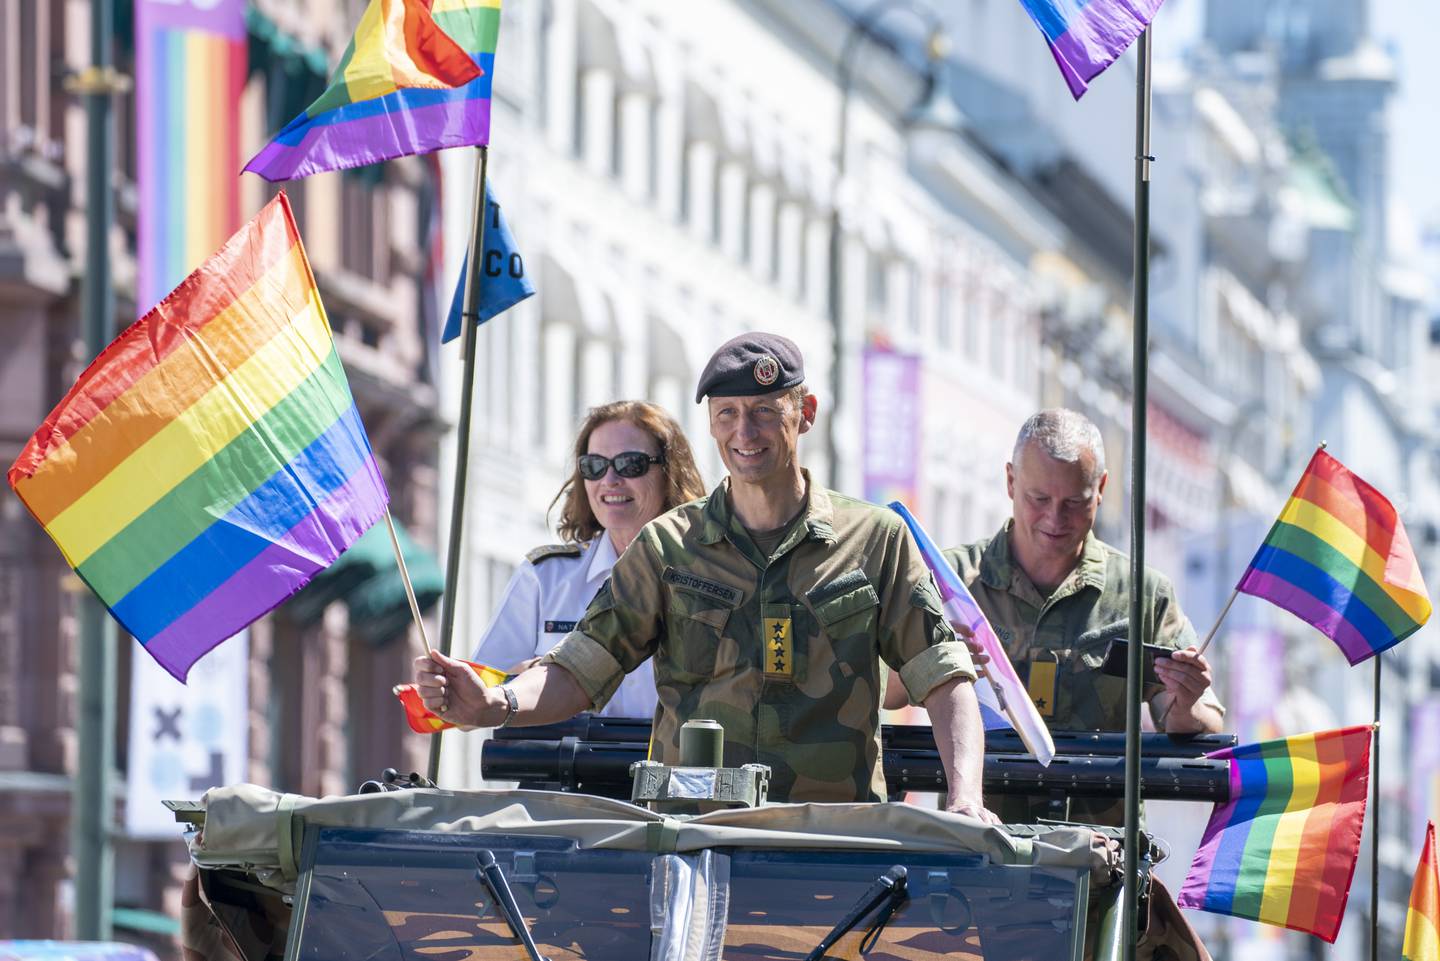 Forsvarssjef Eirik Kristoffersen deltok i Pride-paraden i Oslo sentrum lørdag.
Foto: Terje Pedersen / NTB